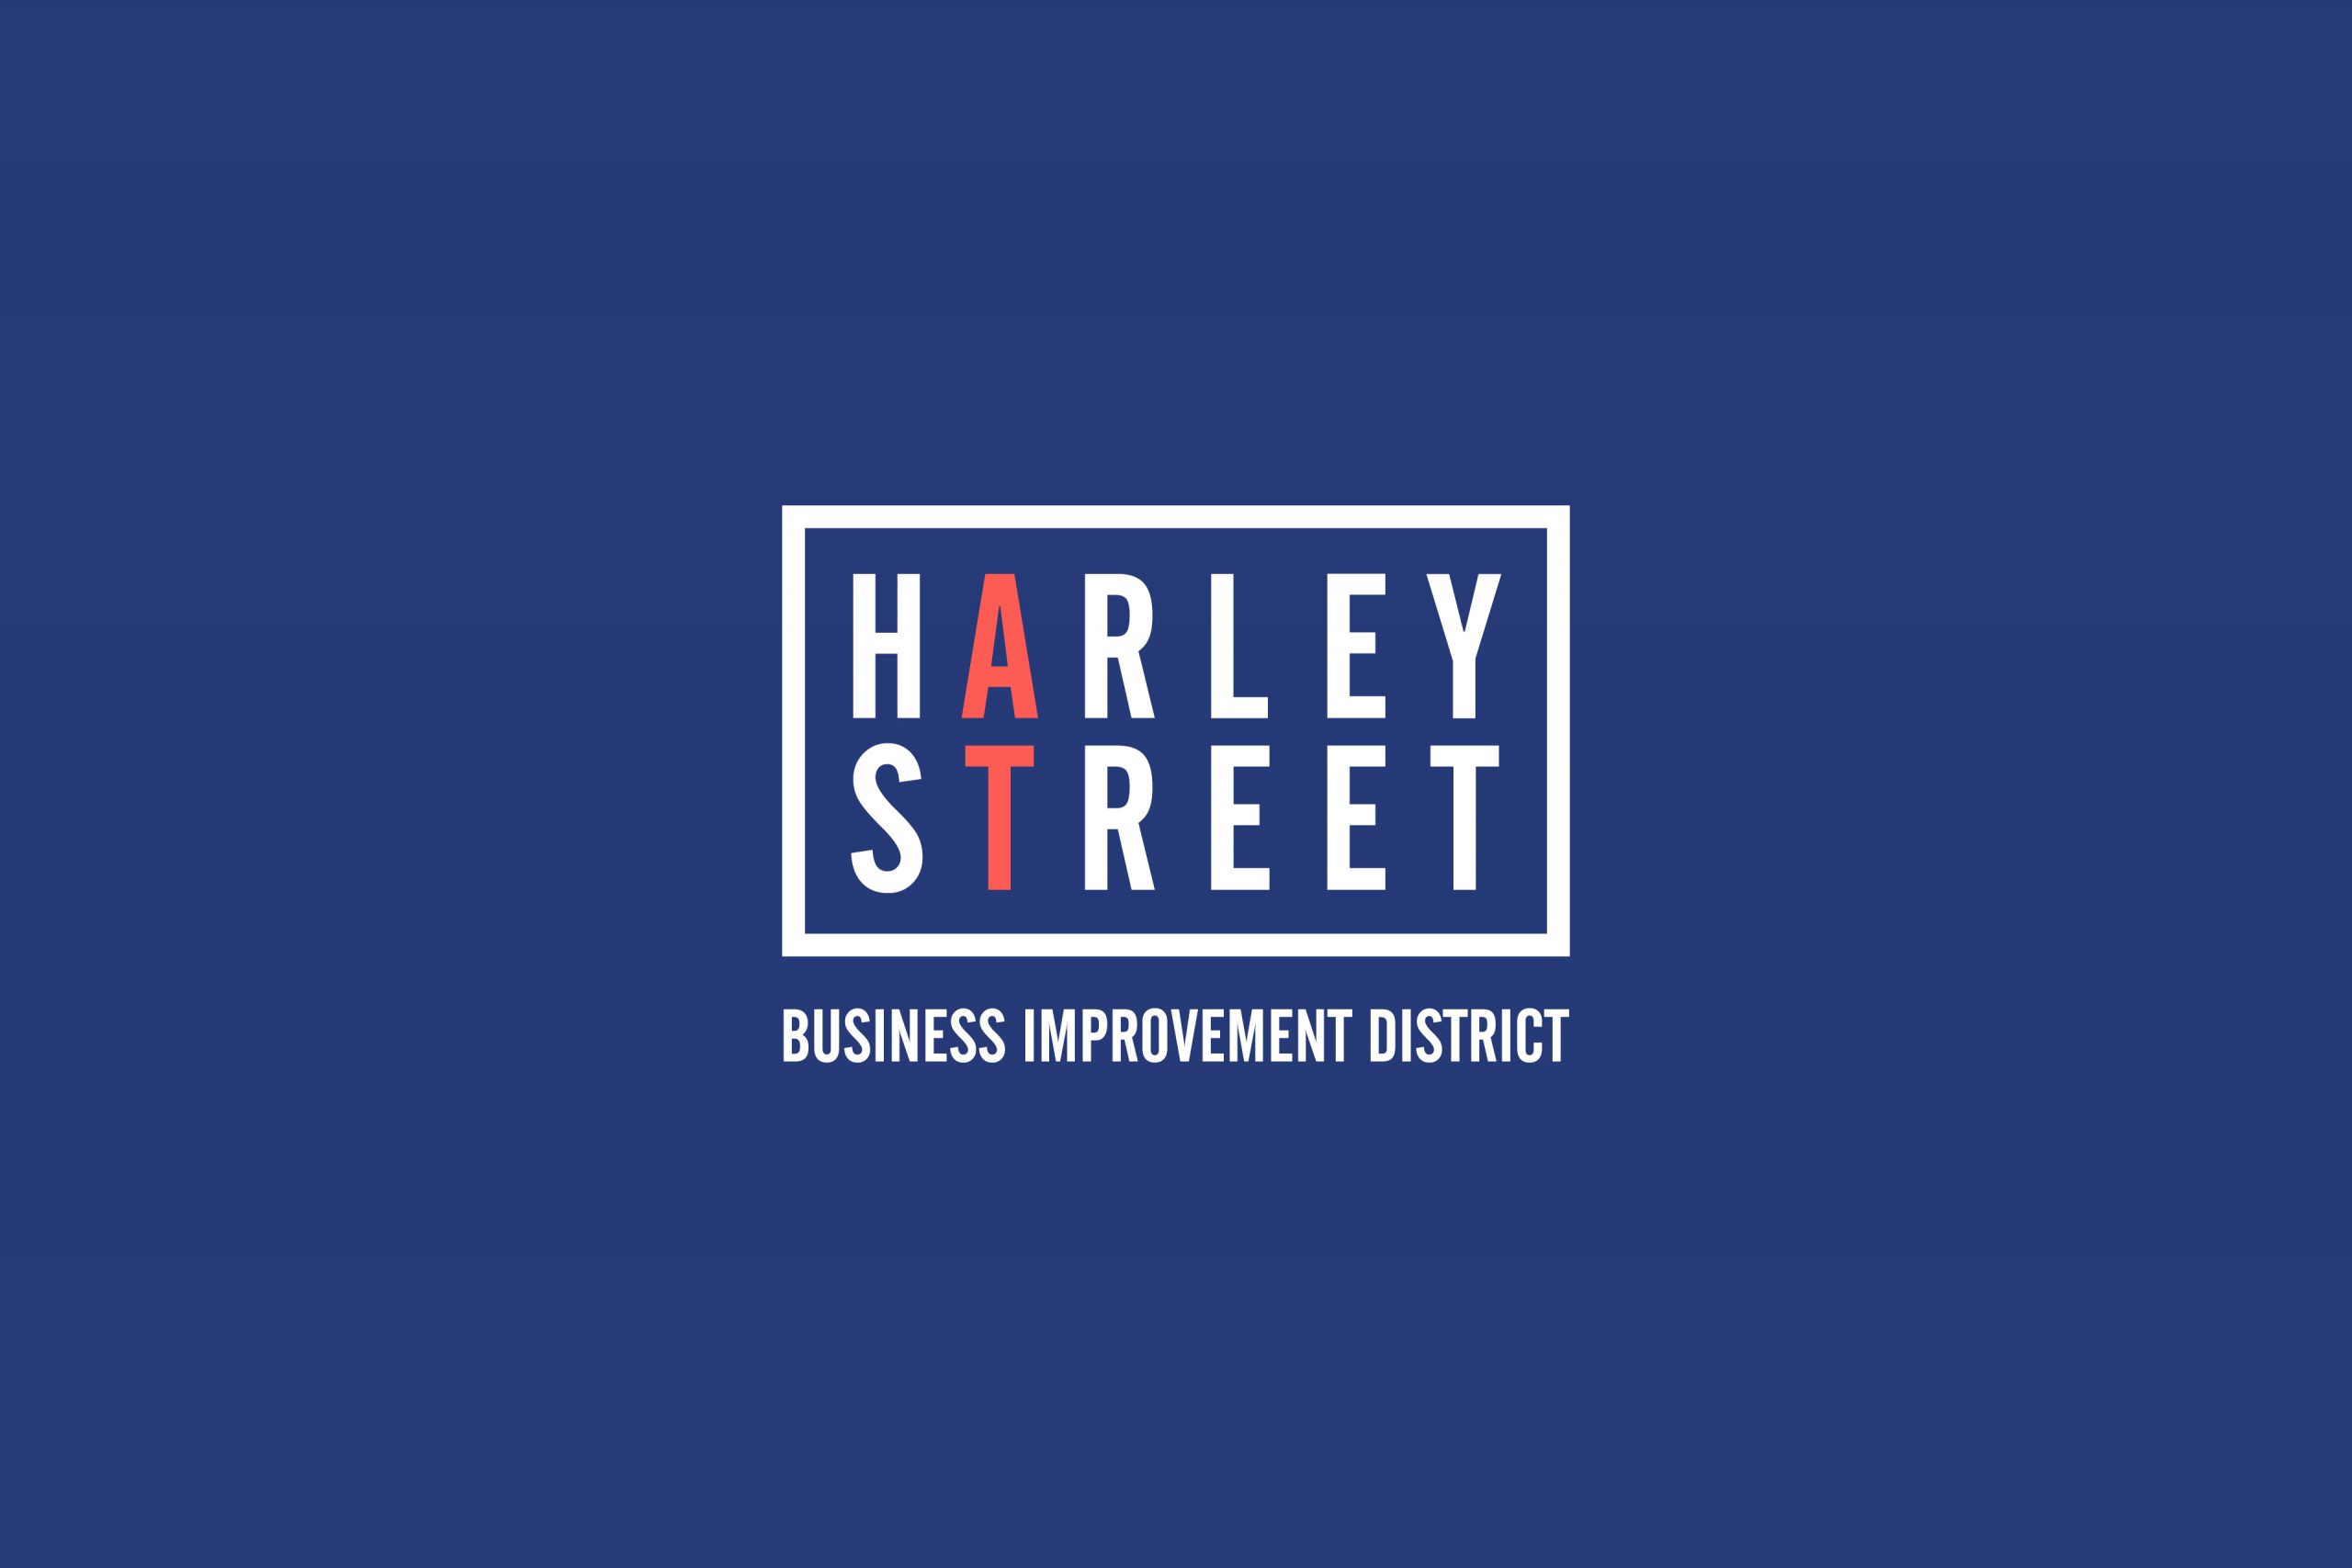 Harley Street Business Improvement District white logo